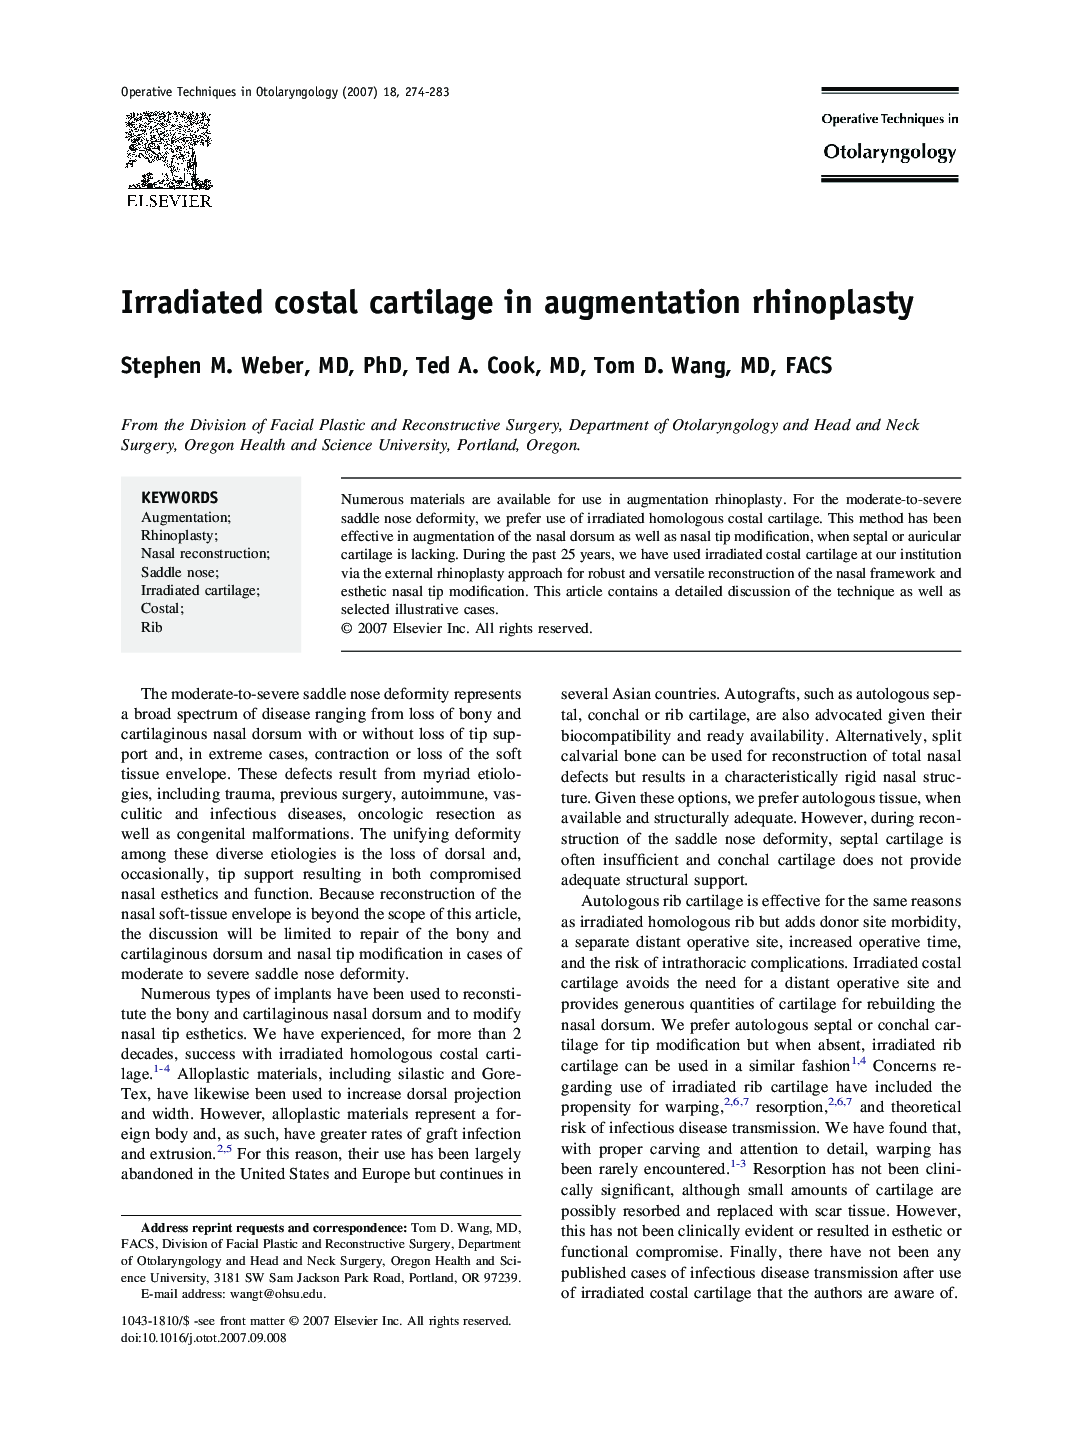 Irradiated costal cartilage in augmentation rhinoplasty